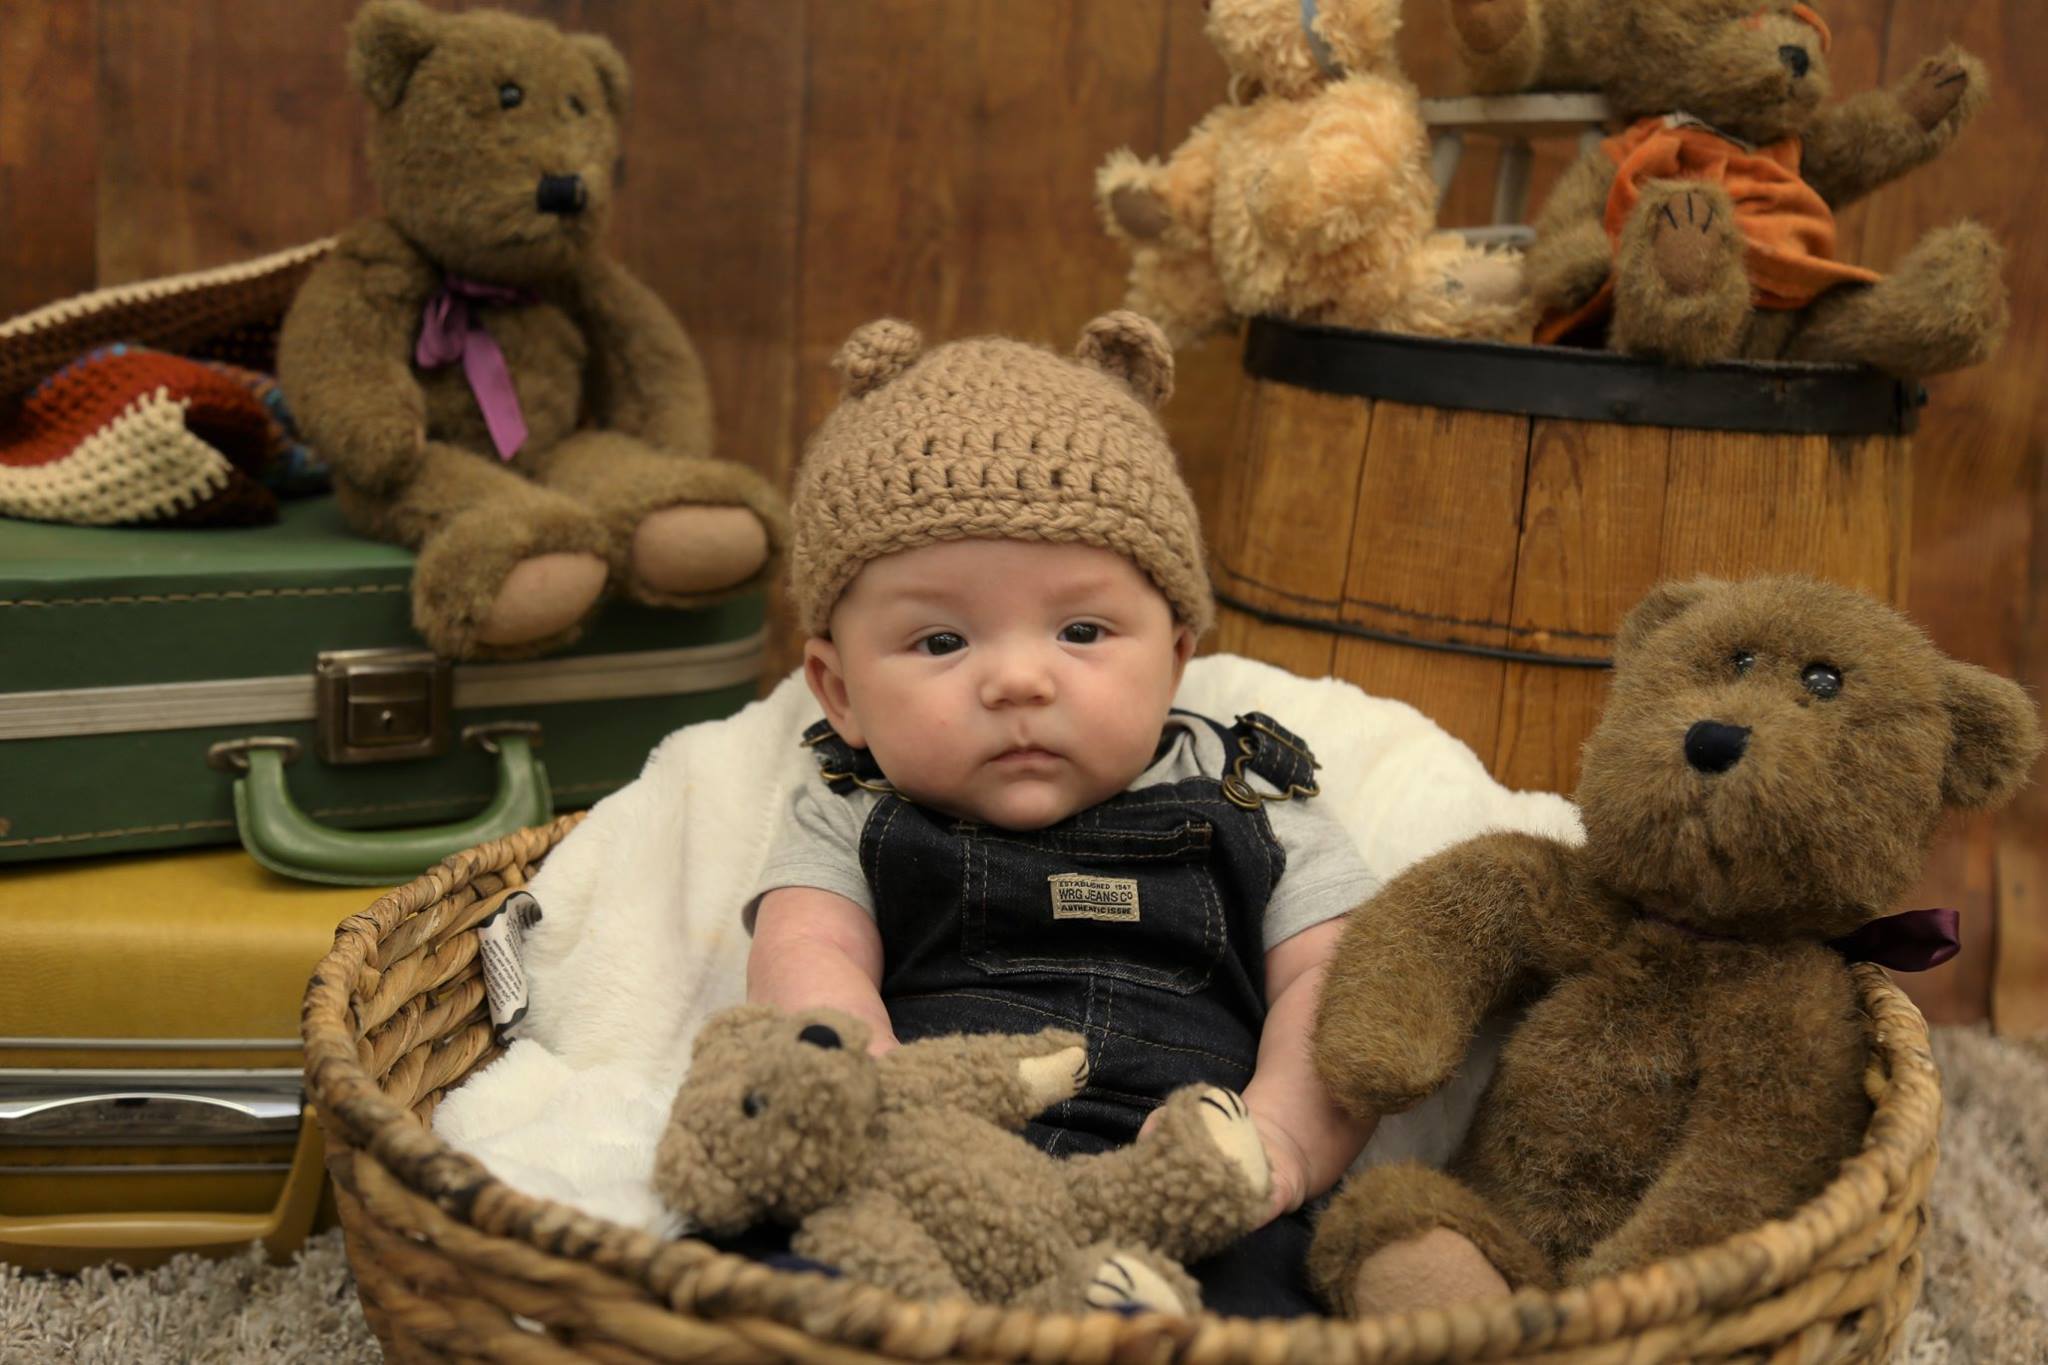 teddy bear.jpg